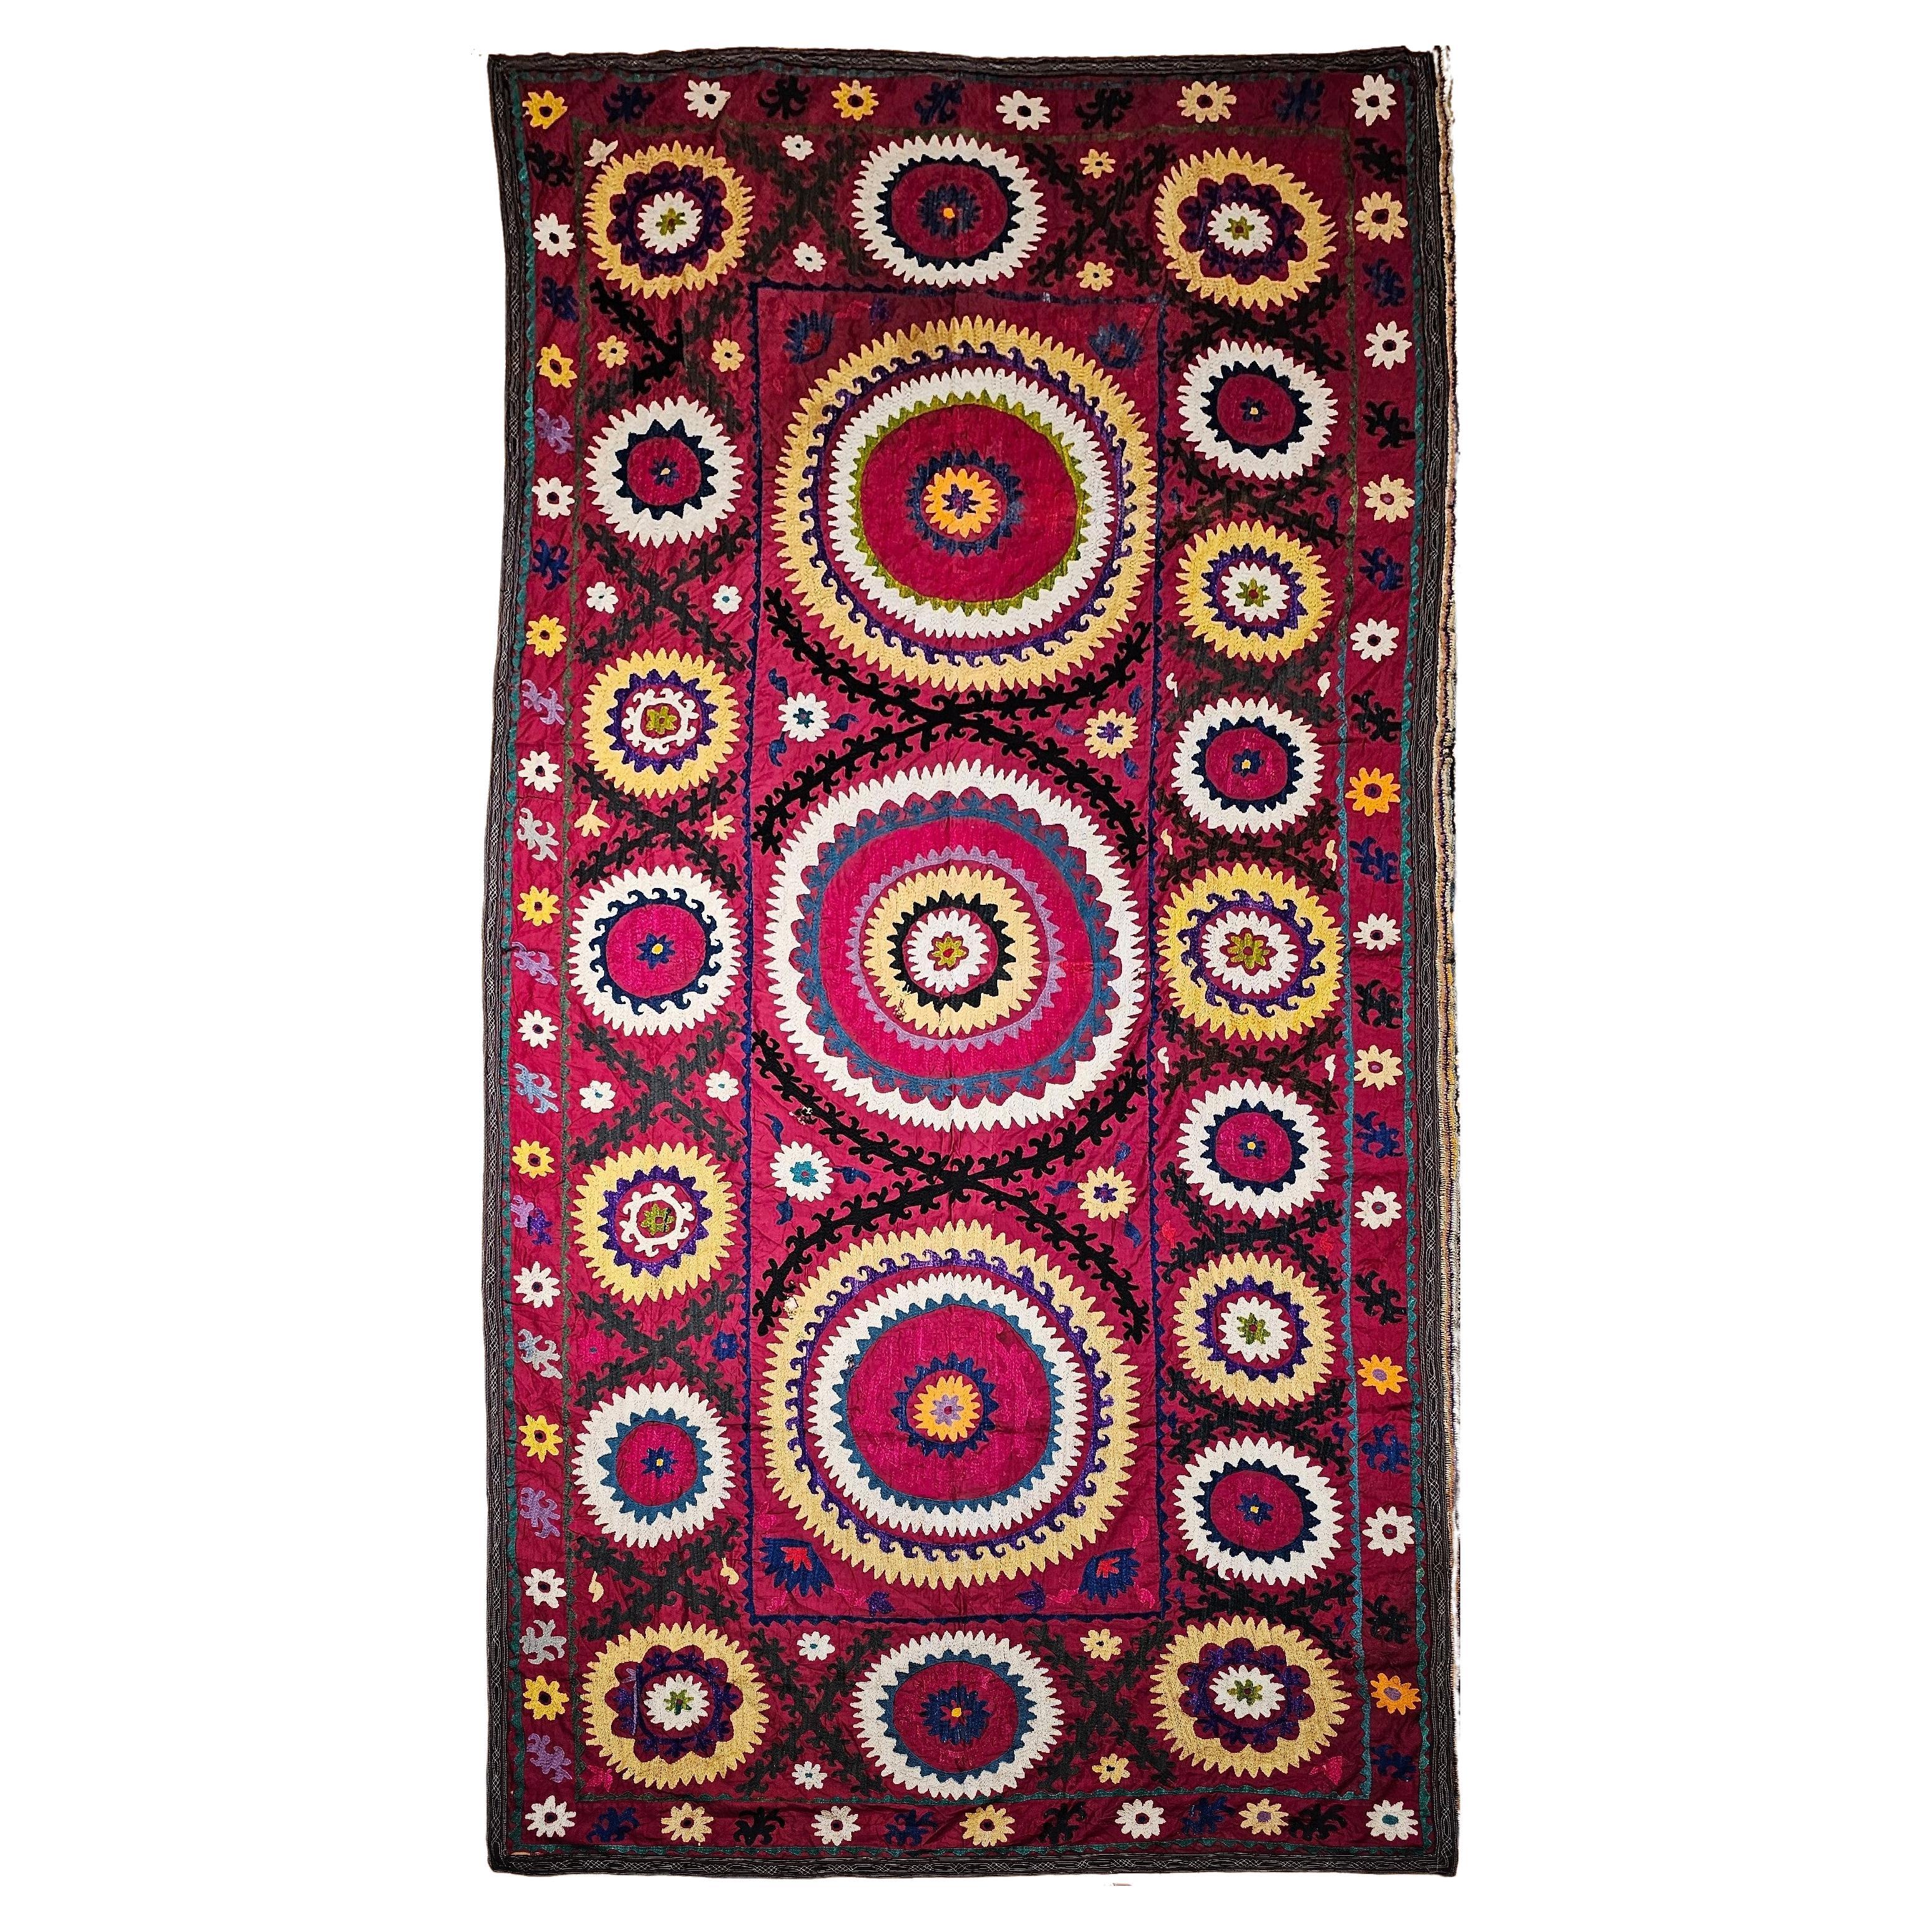 Vintage Uzbek Suzani Silk Embroidery in Crimson Red, Ivory, Blue, Yellow, Black